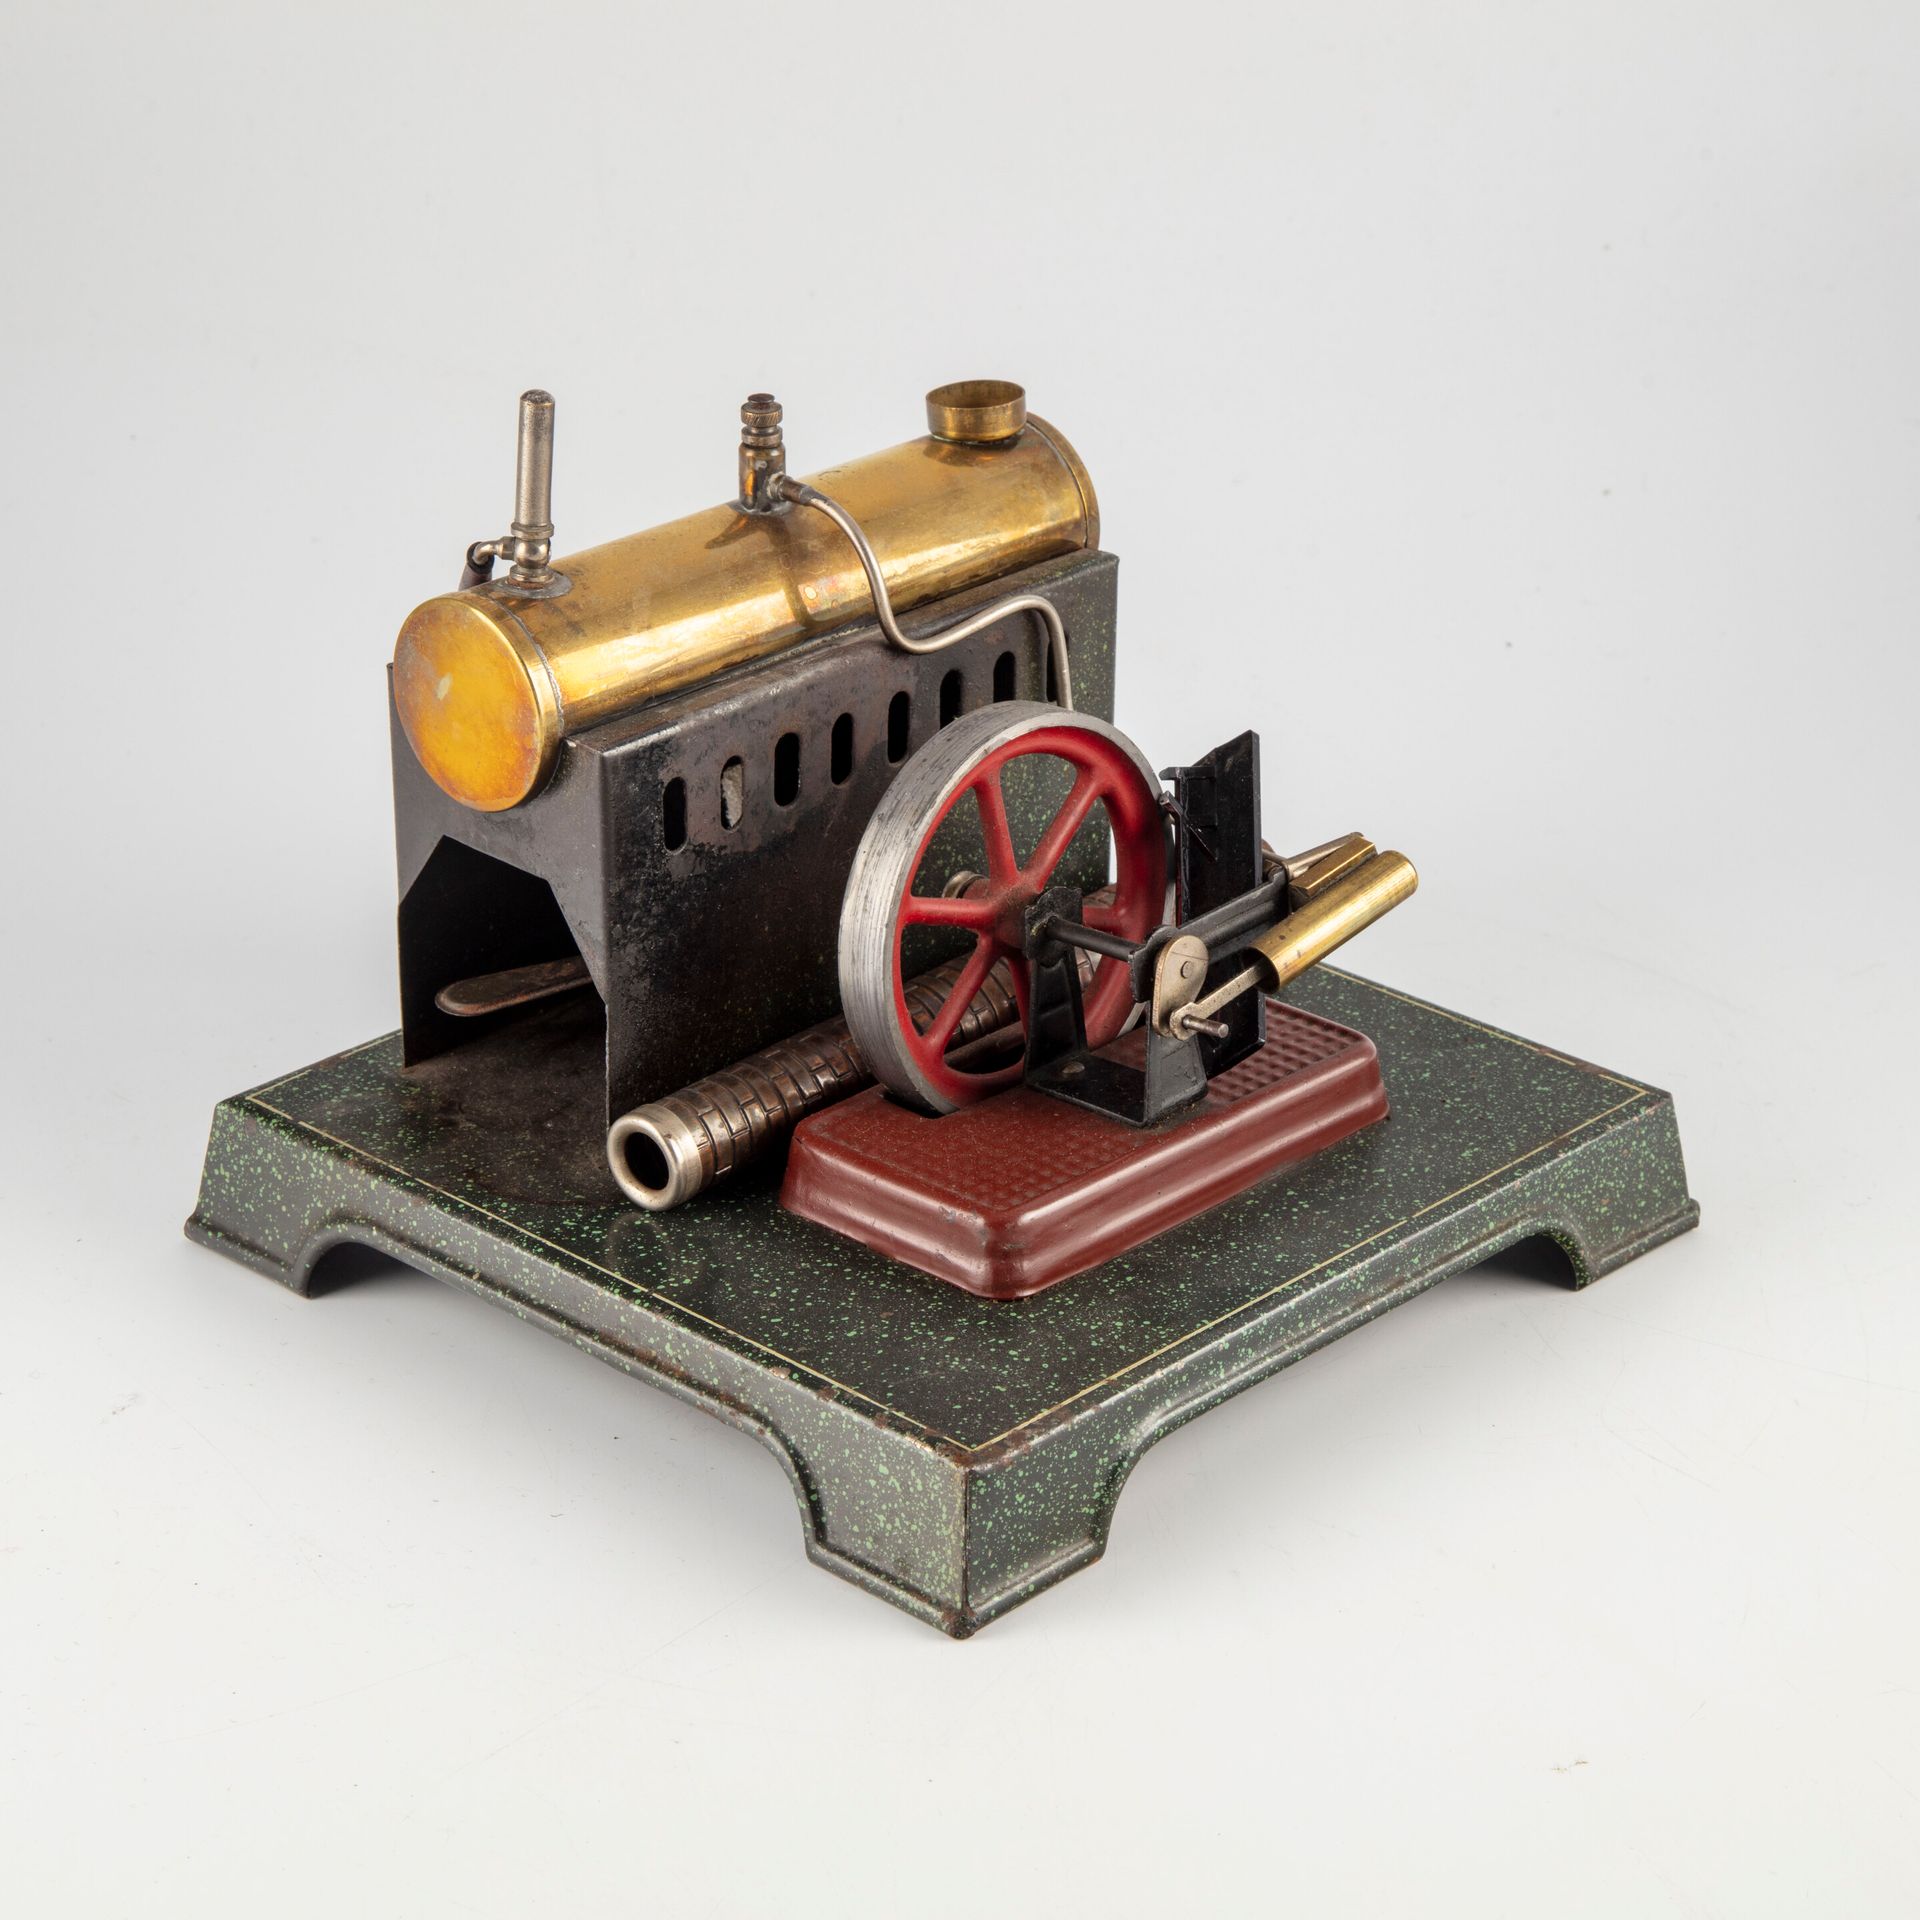 Null 儿童蒸汽机的金属板微型模型。 
H.16 cm; W: 21 cm; D: 21 cm 
(有锈斑和缺失的部分)